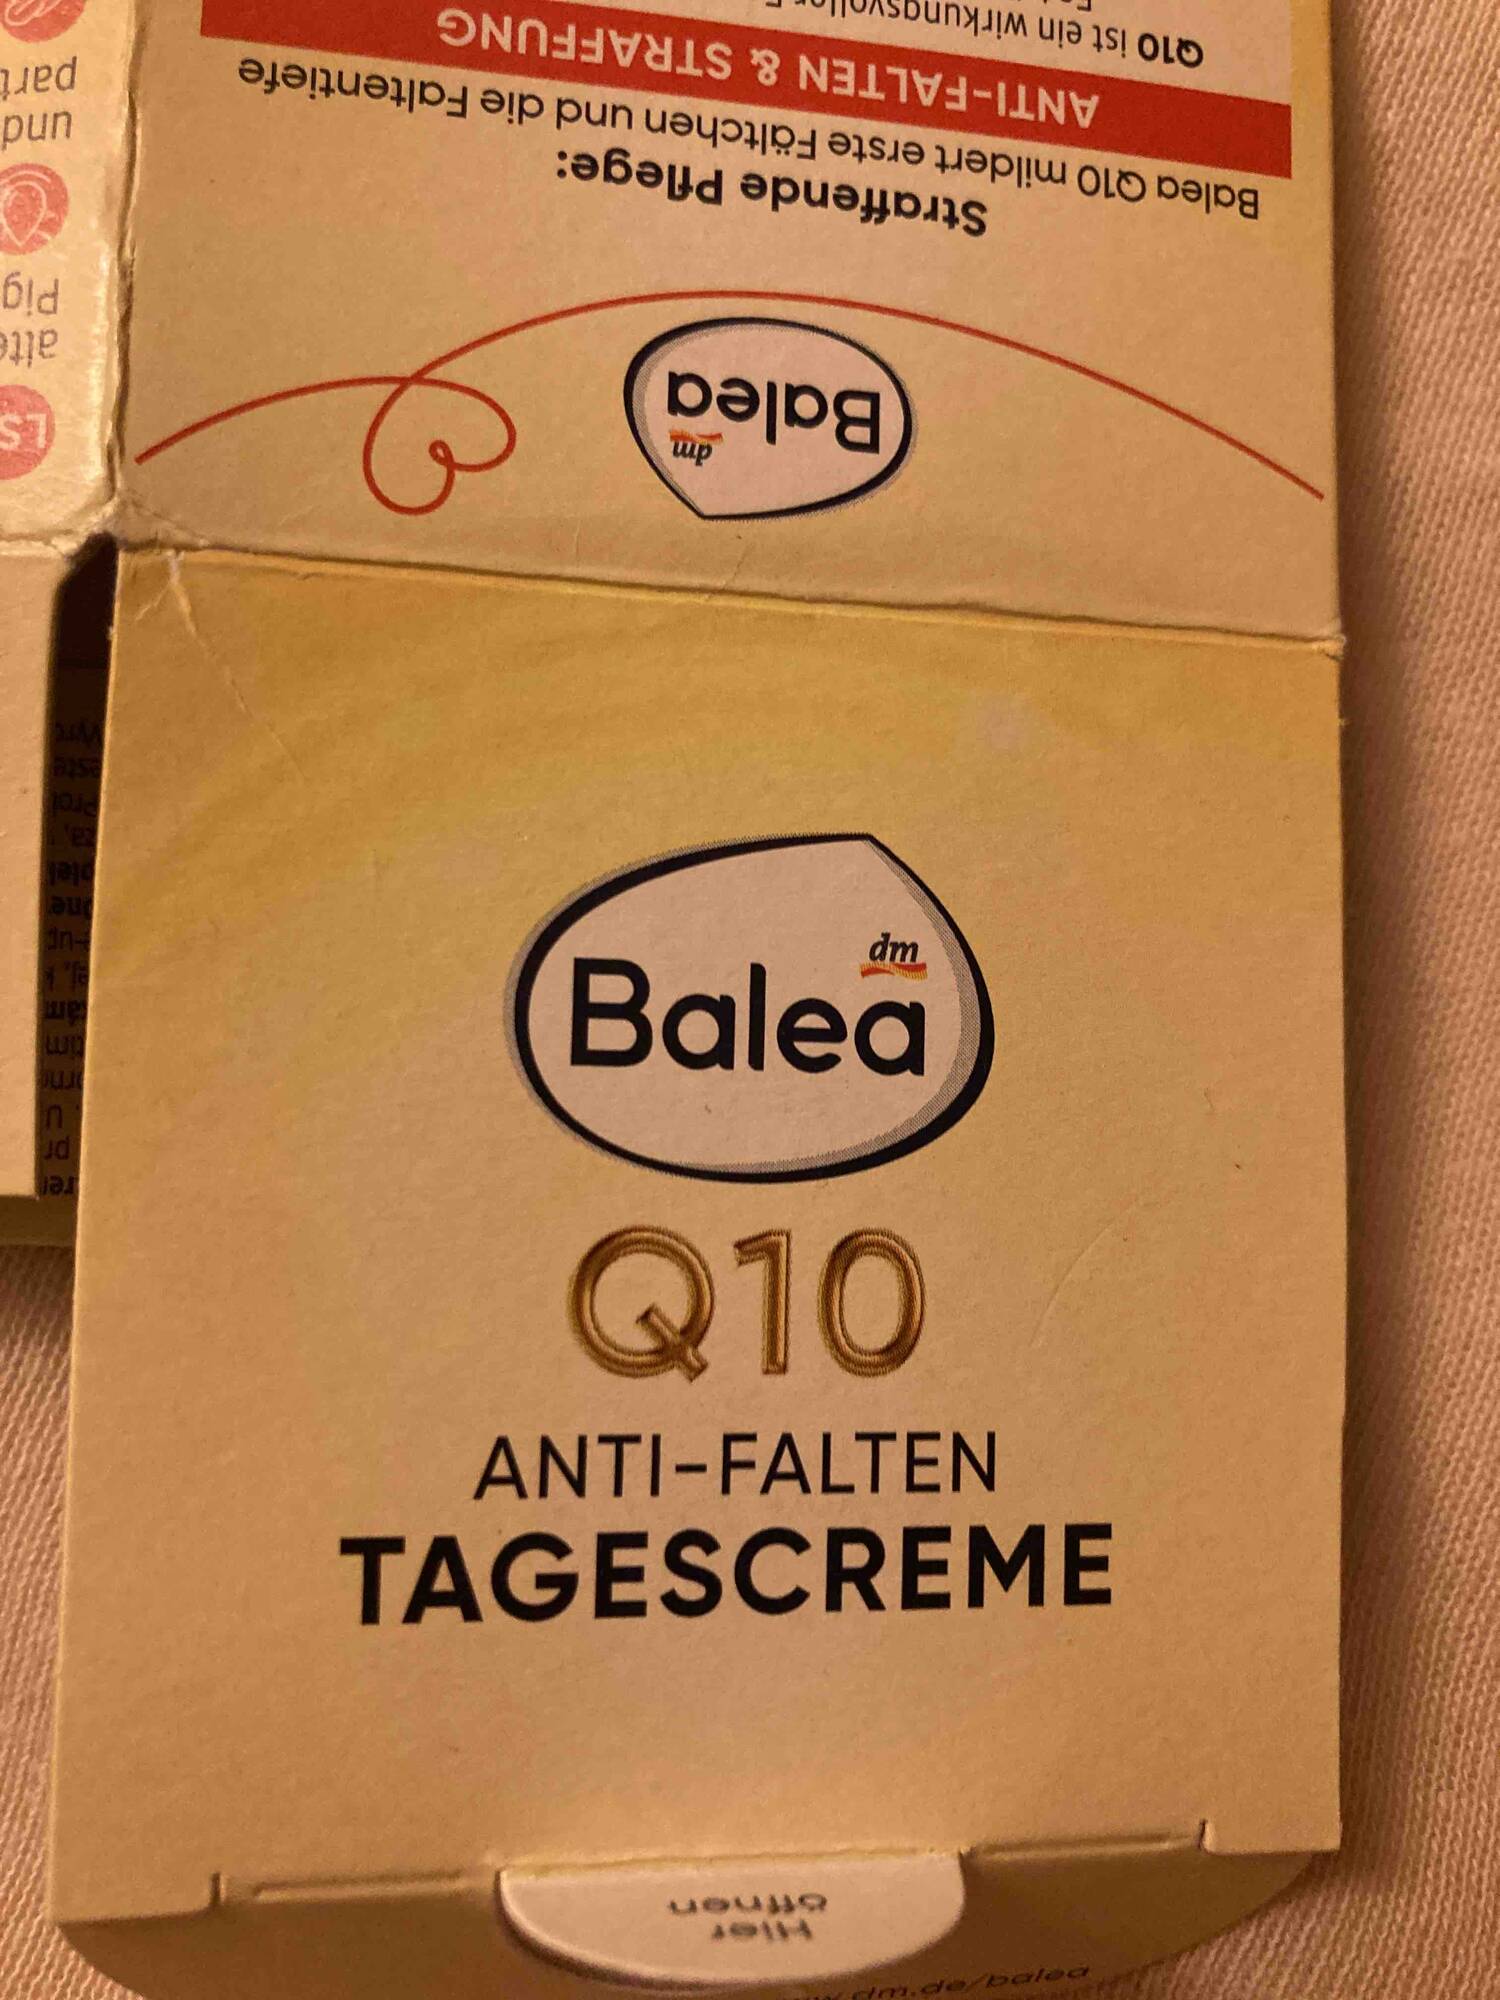 BALEA - Q10 tagescreme anti-falten